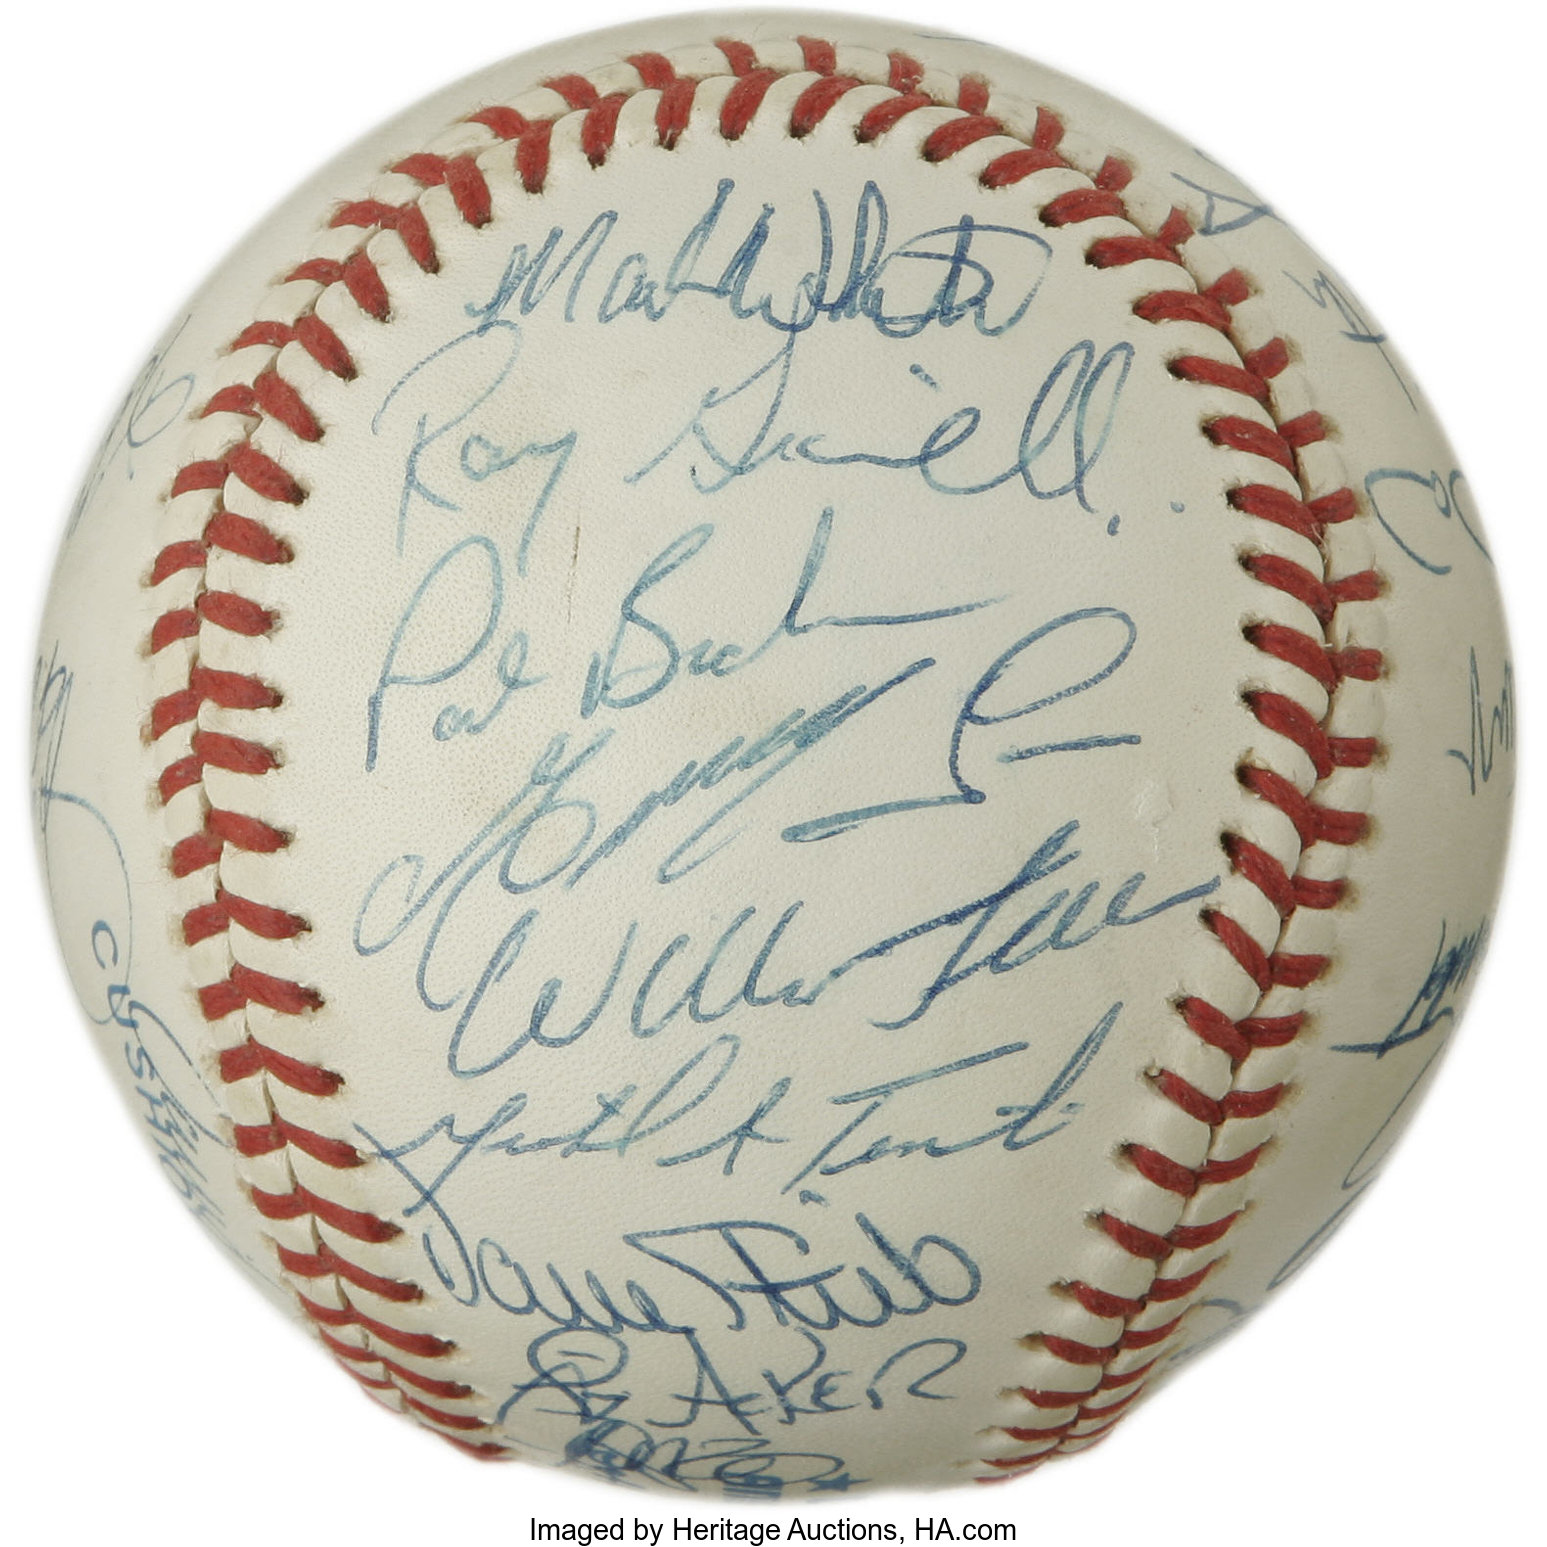 1992 Toronto Blue Jays World Champion Team Signed Baseball. Each